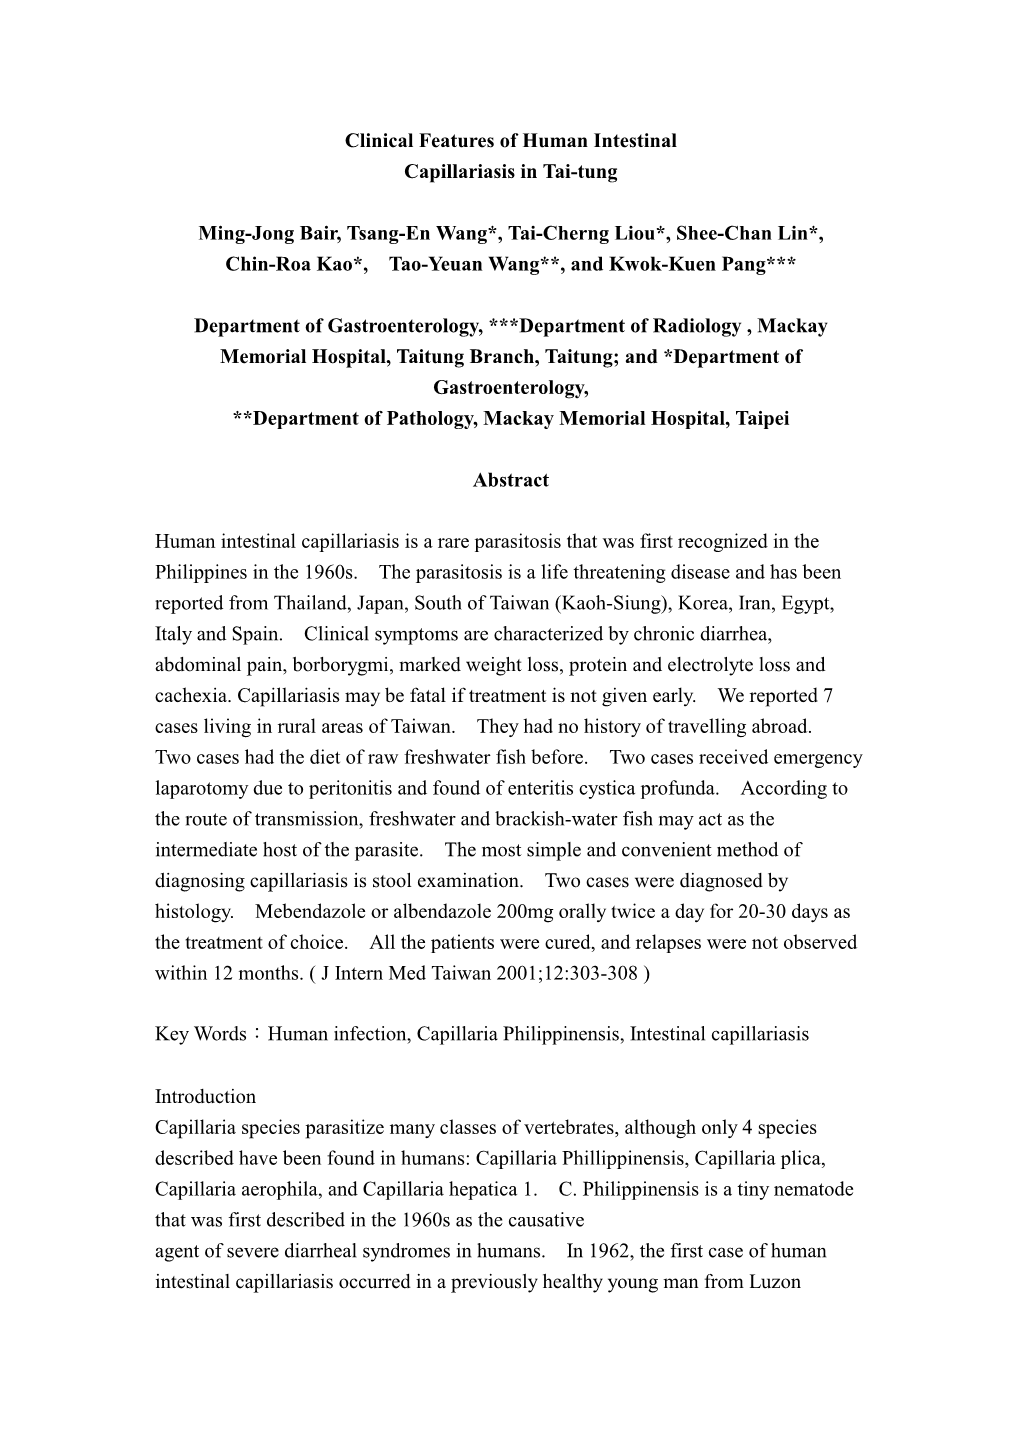 Clinical Features of Human Intestinal Capillariasis in Tai-Tung